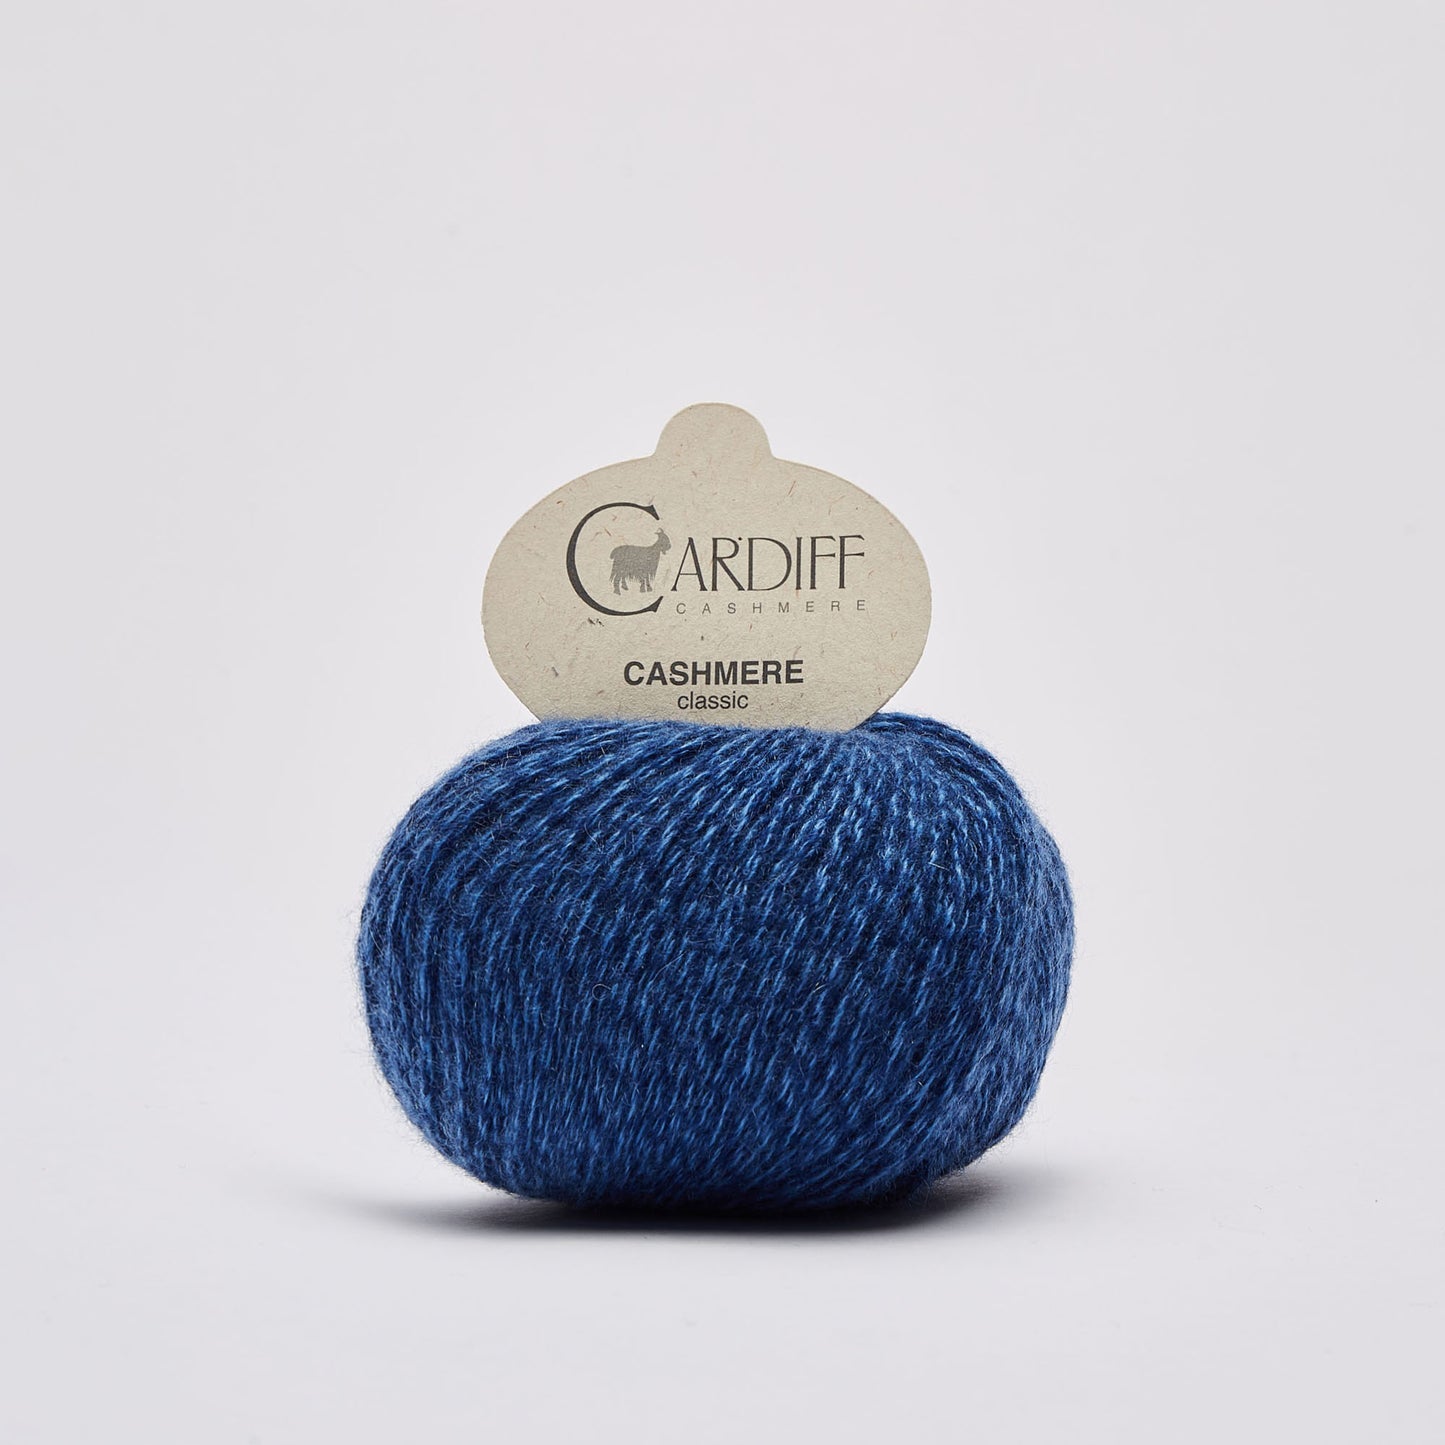 Cardiff CLASSIC gentle yarn, 557, BLU NOTTE, comp: 100% Cashmere